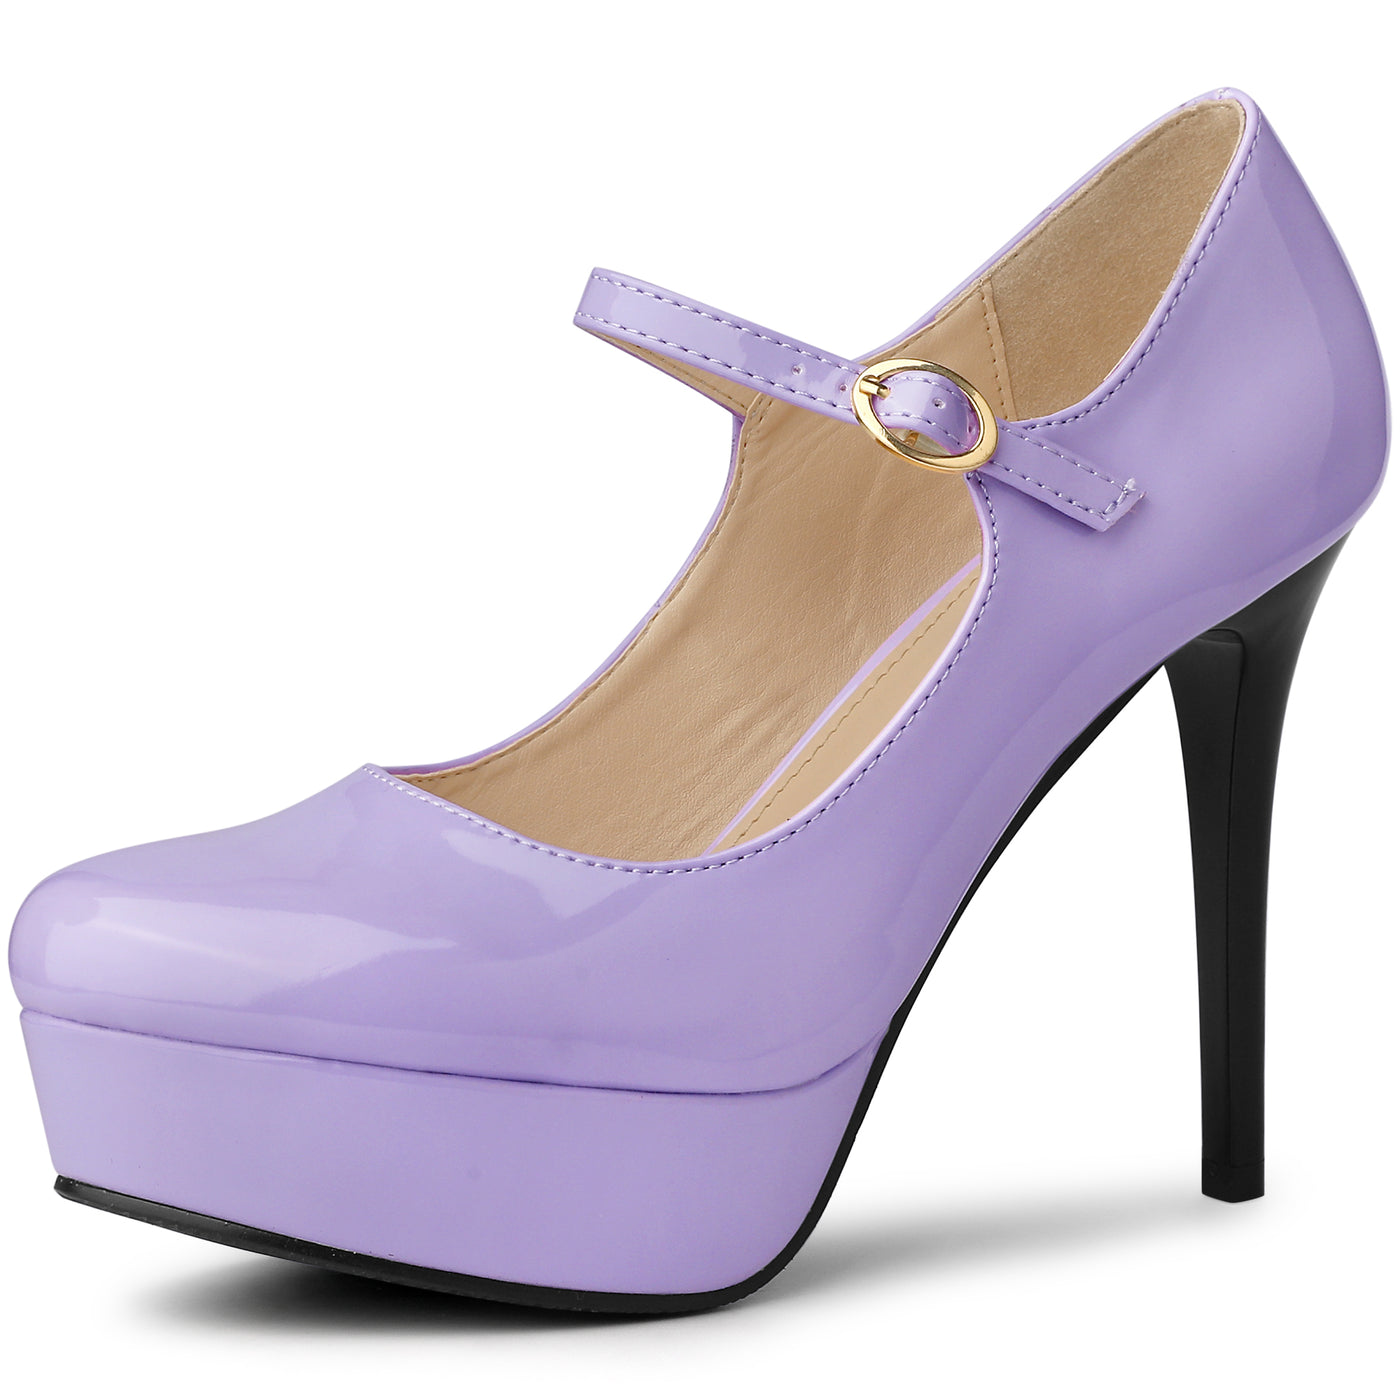 Allegra K Platform Ankle Strap Stiletto Heel Dress Shoes Mary Jane Pumps